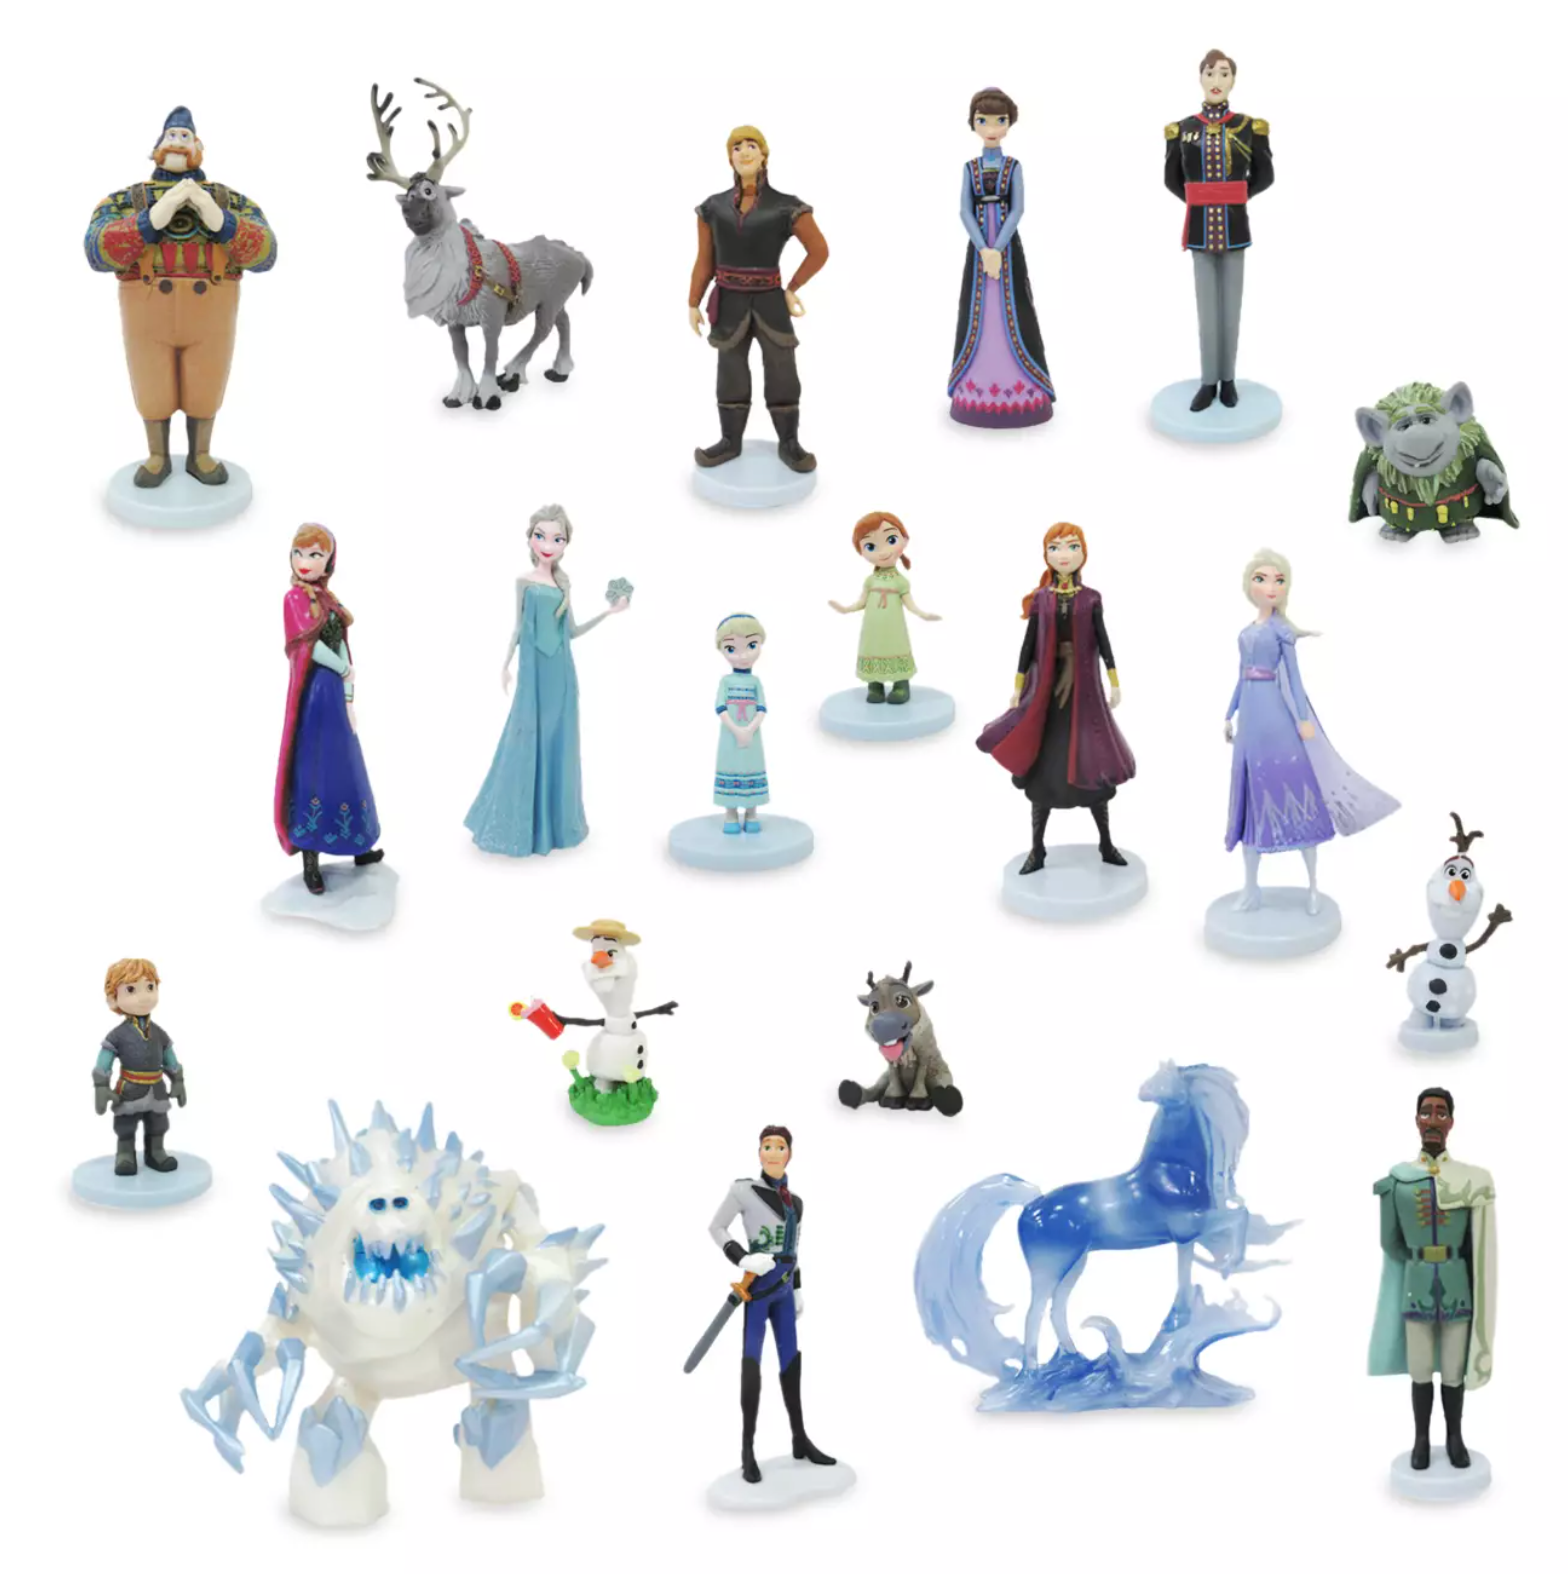 Frozen and Frozen 2 mega figure playset